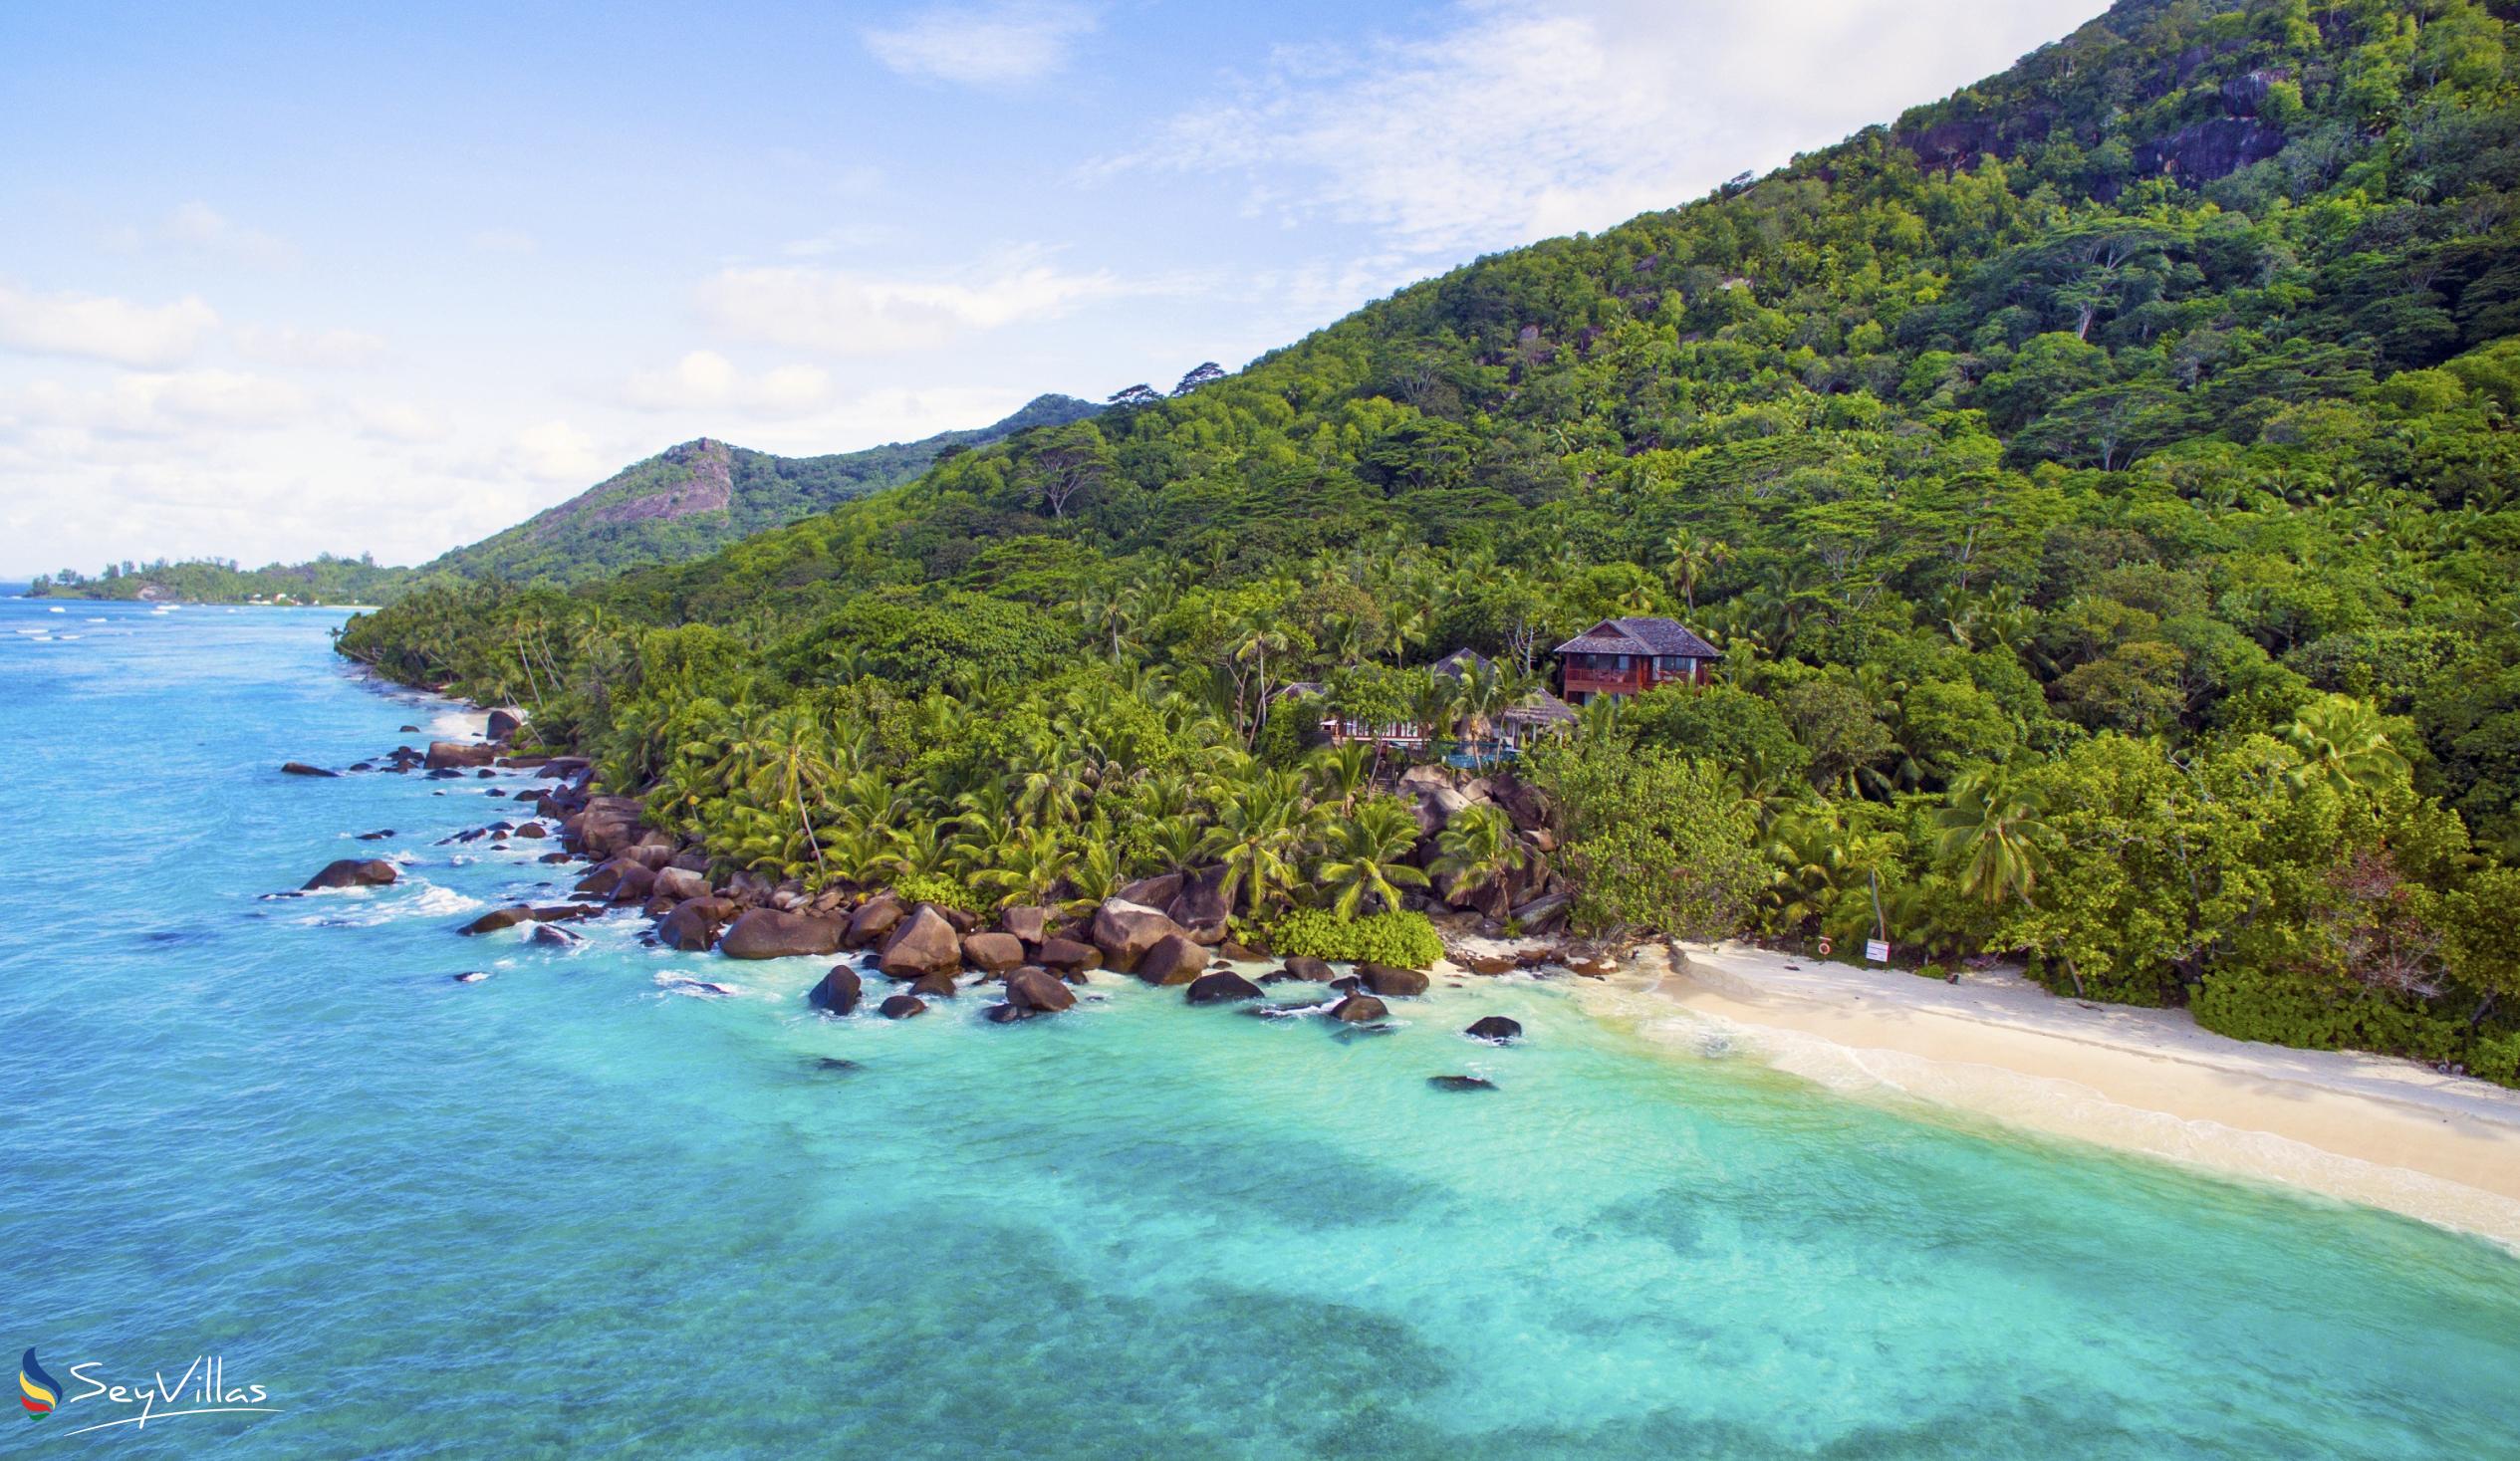 Photo 72: Hilton Seychelles Labriz Resort & Spa - Outdoor area - Silhouette Island (Seychelles)